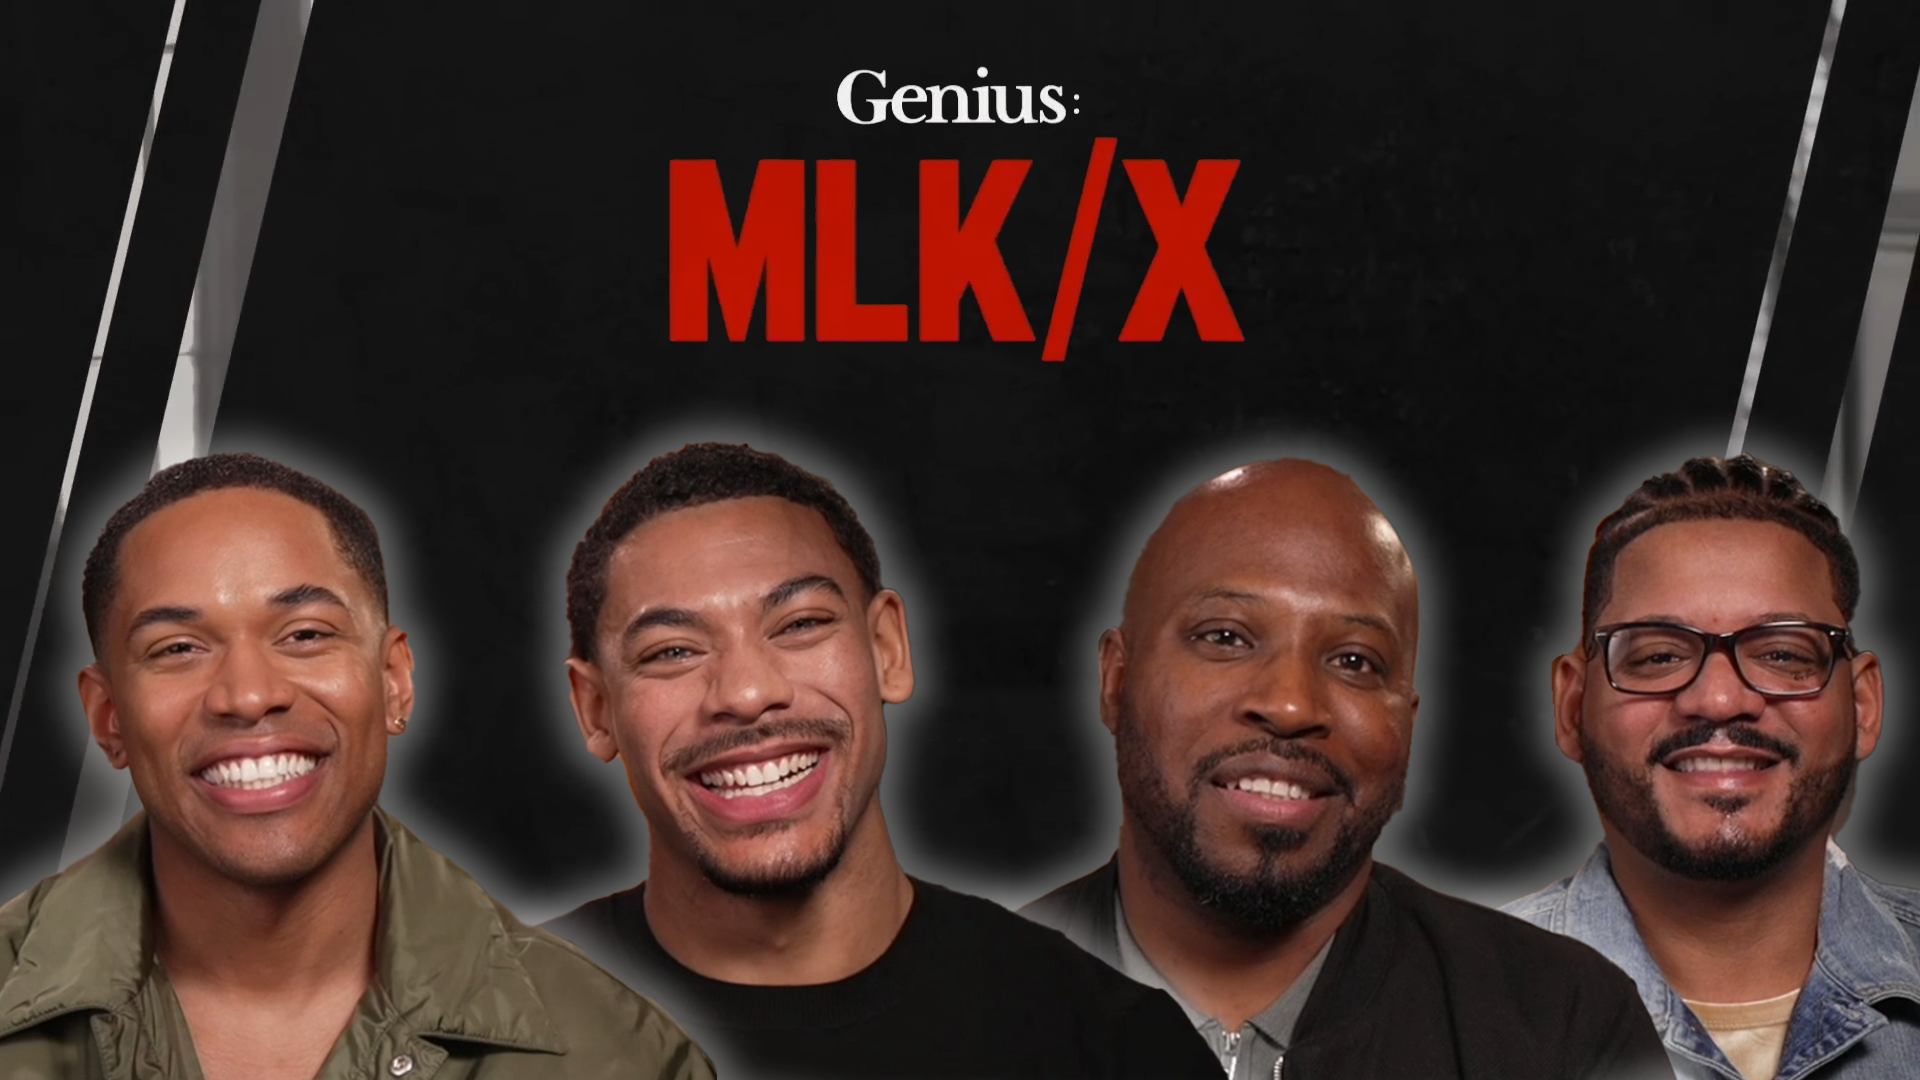 The cast of Genius: MLK/X